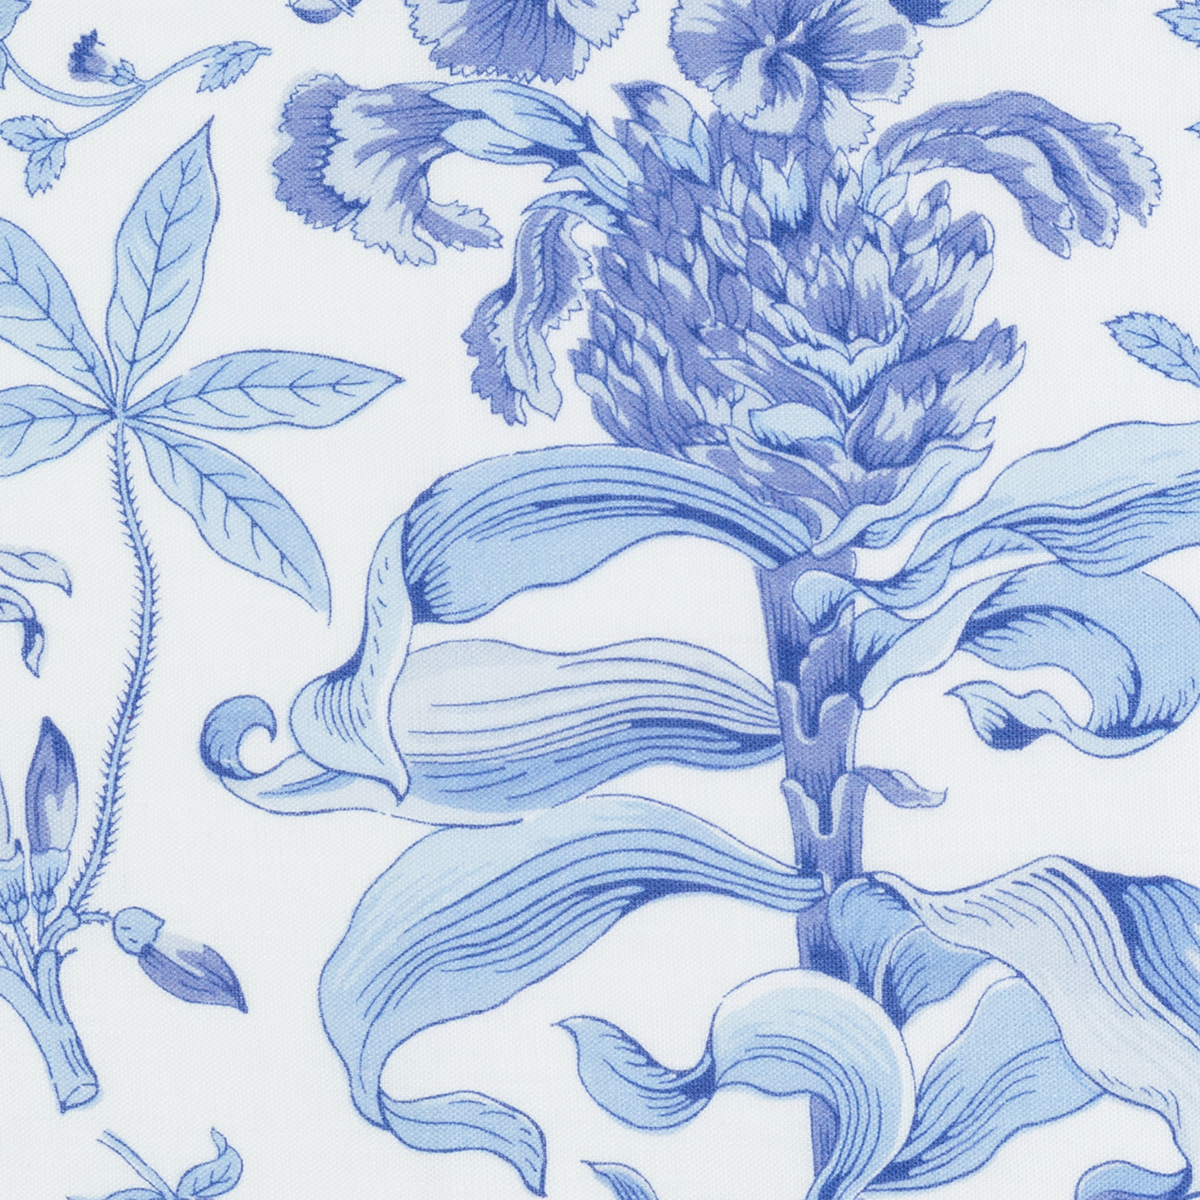 Fabric Sample of Porcelain Blue Matouk Schumacher Pomegranate Linen Shower Curtain